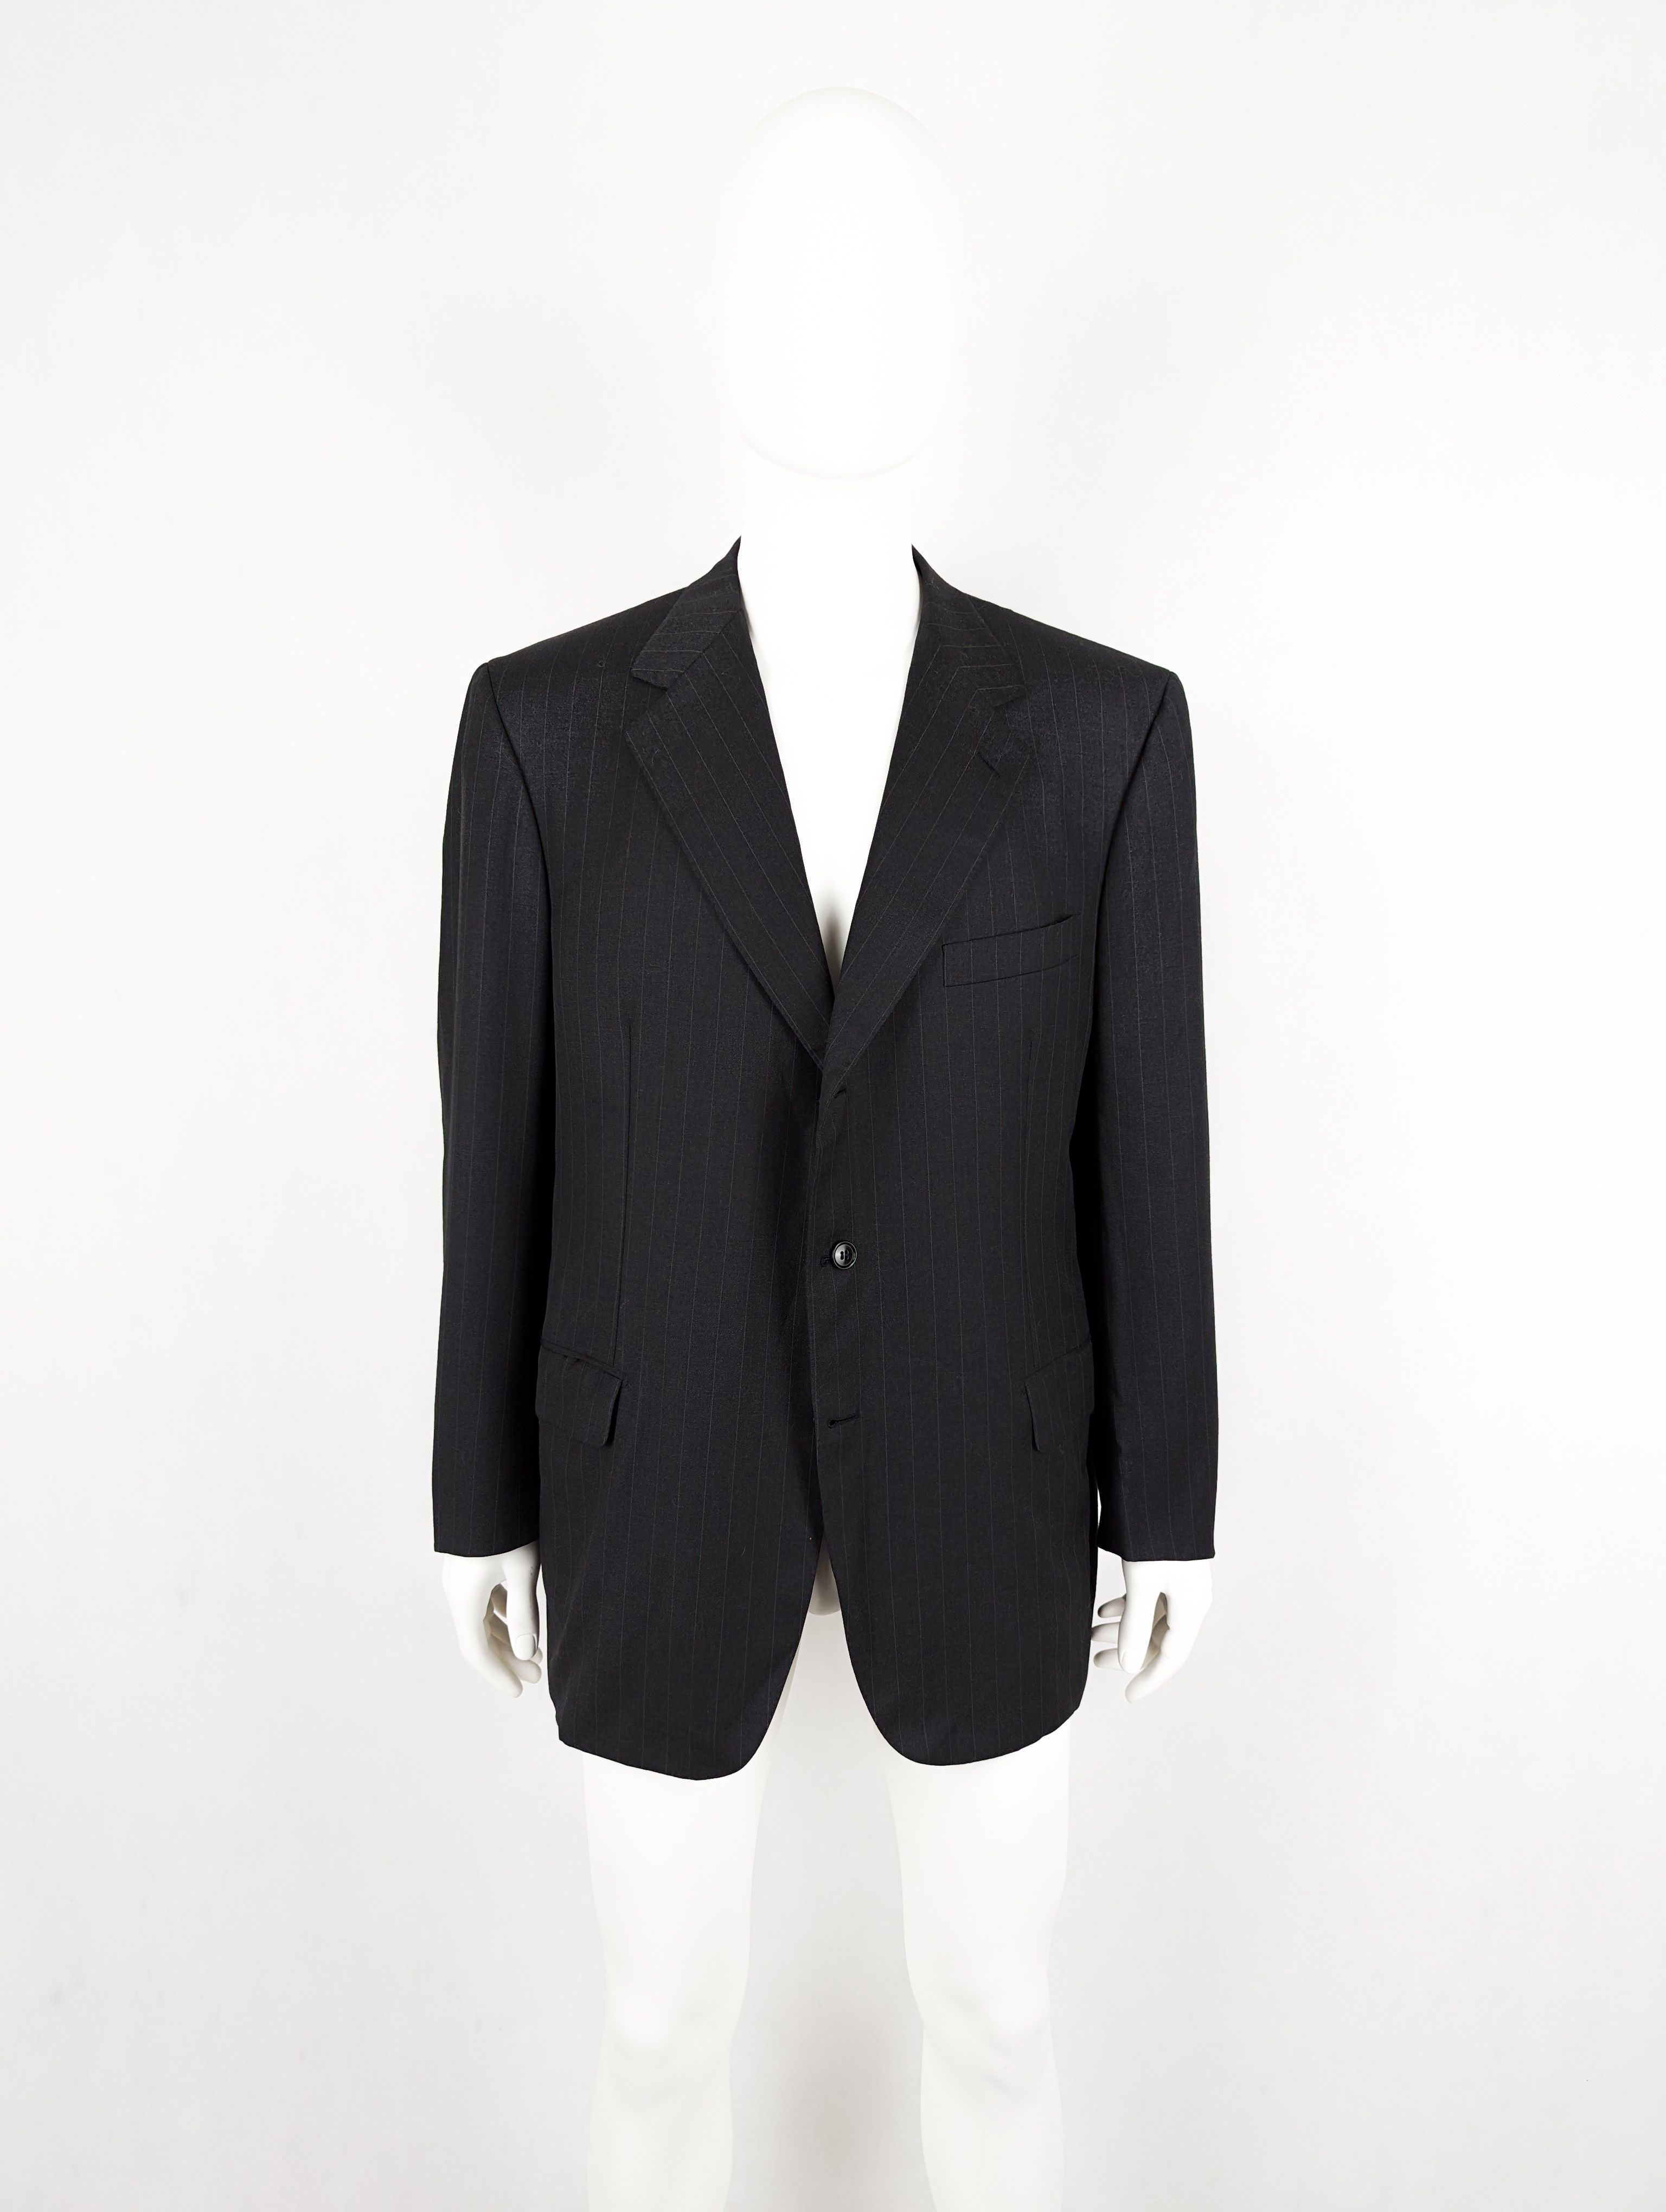 Brioni Brioni wool jacket blazer suit | Grailed